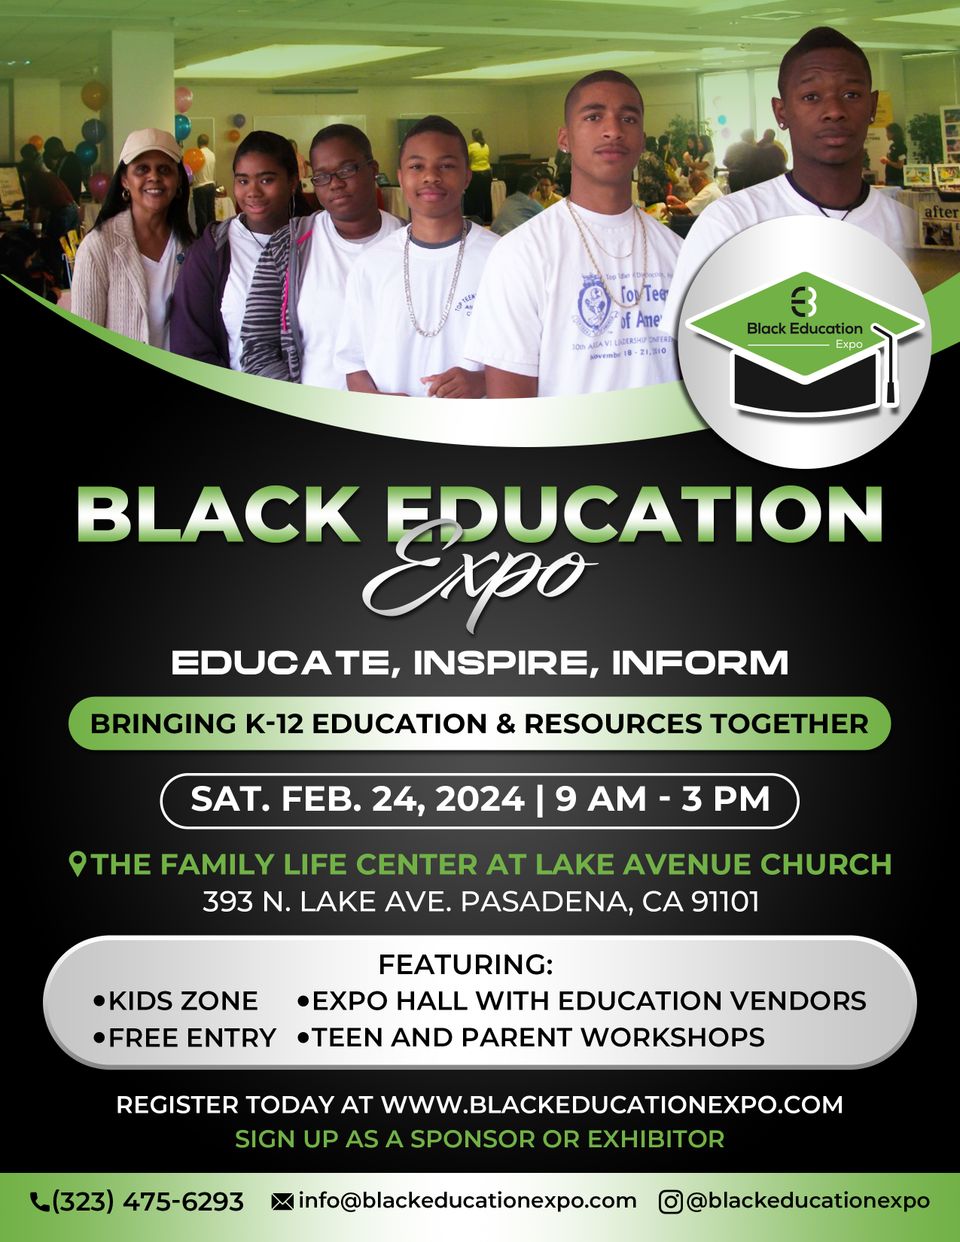 Black education expo flyer